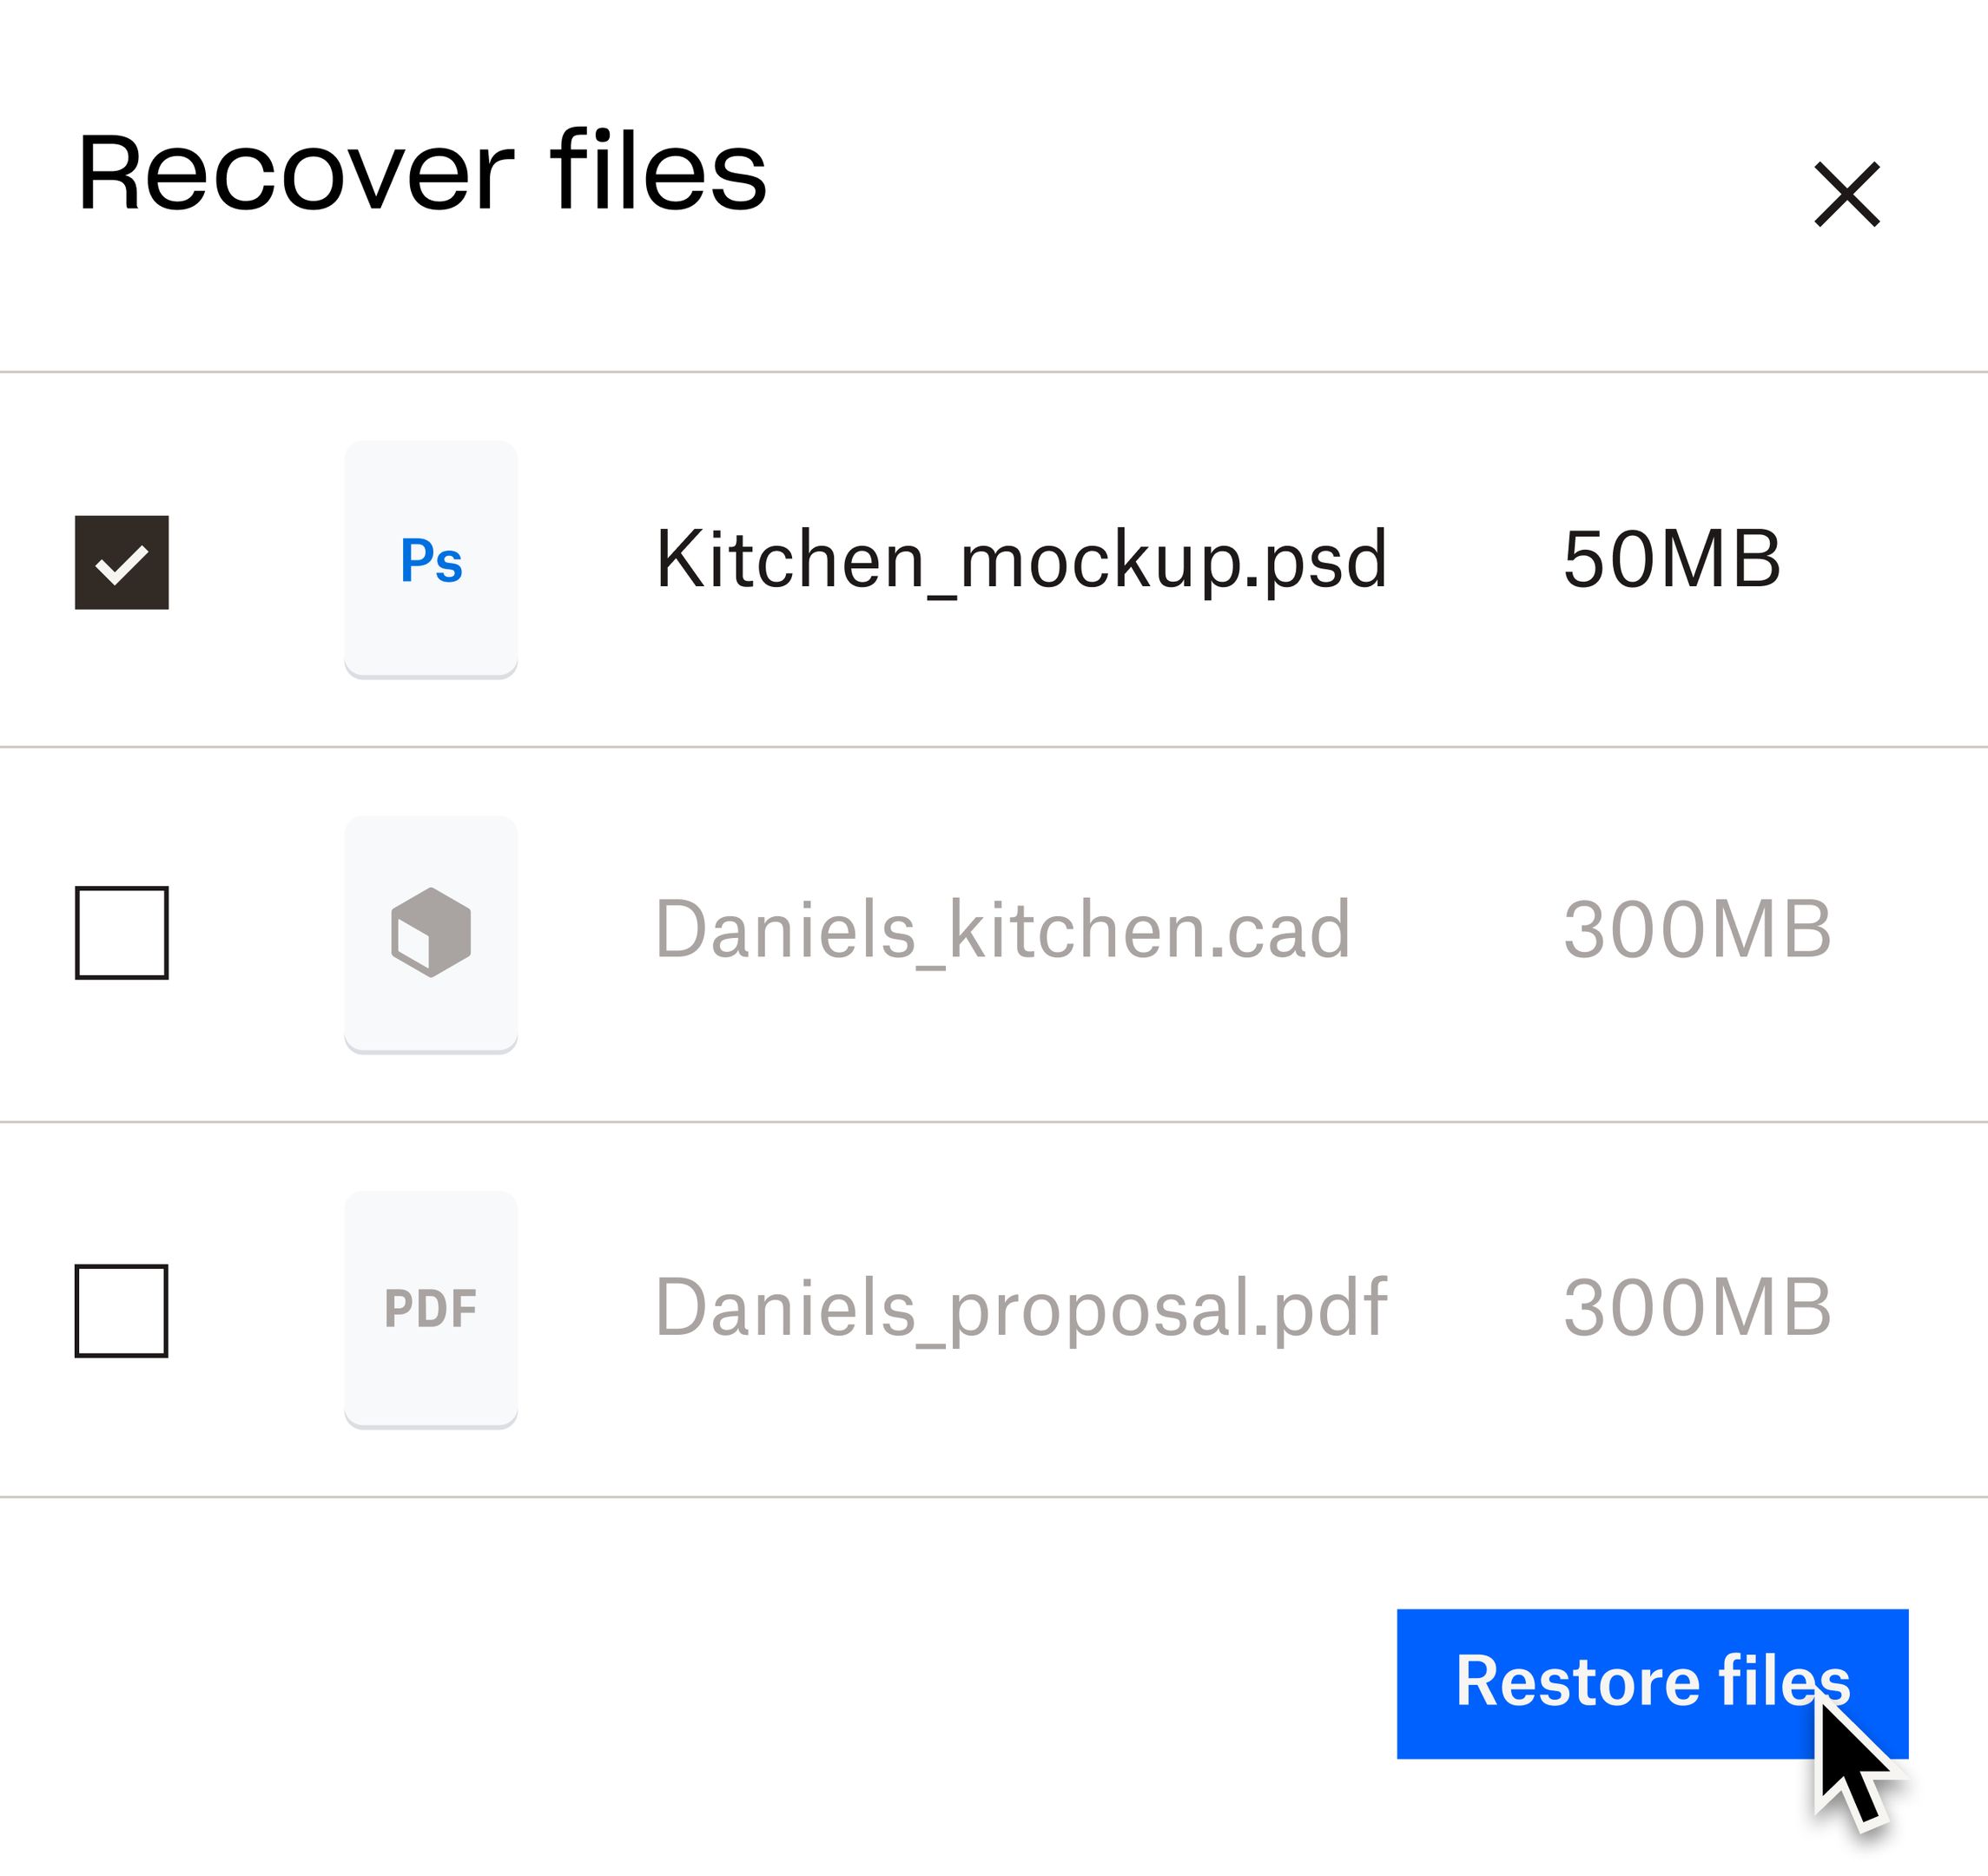 Dropbox 클라우드 스토리지에 있는 파일을 복원하는 프로세스를 보여주는 시각적 예시